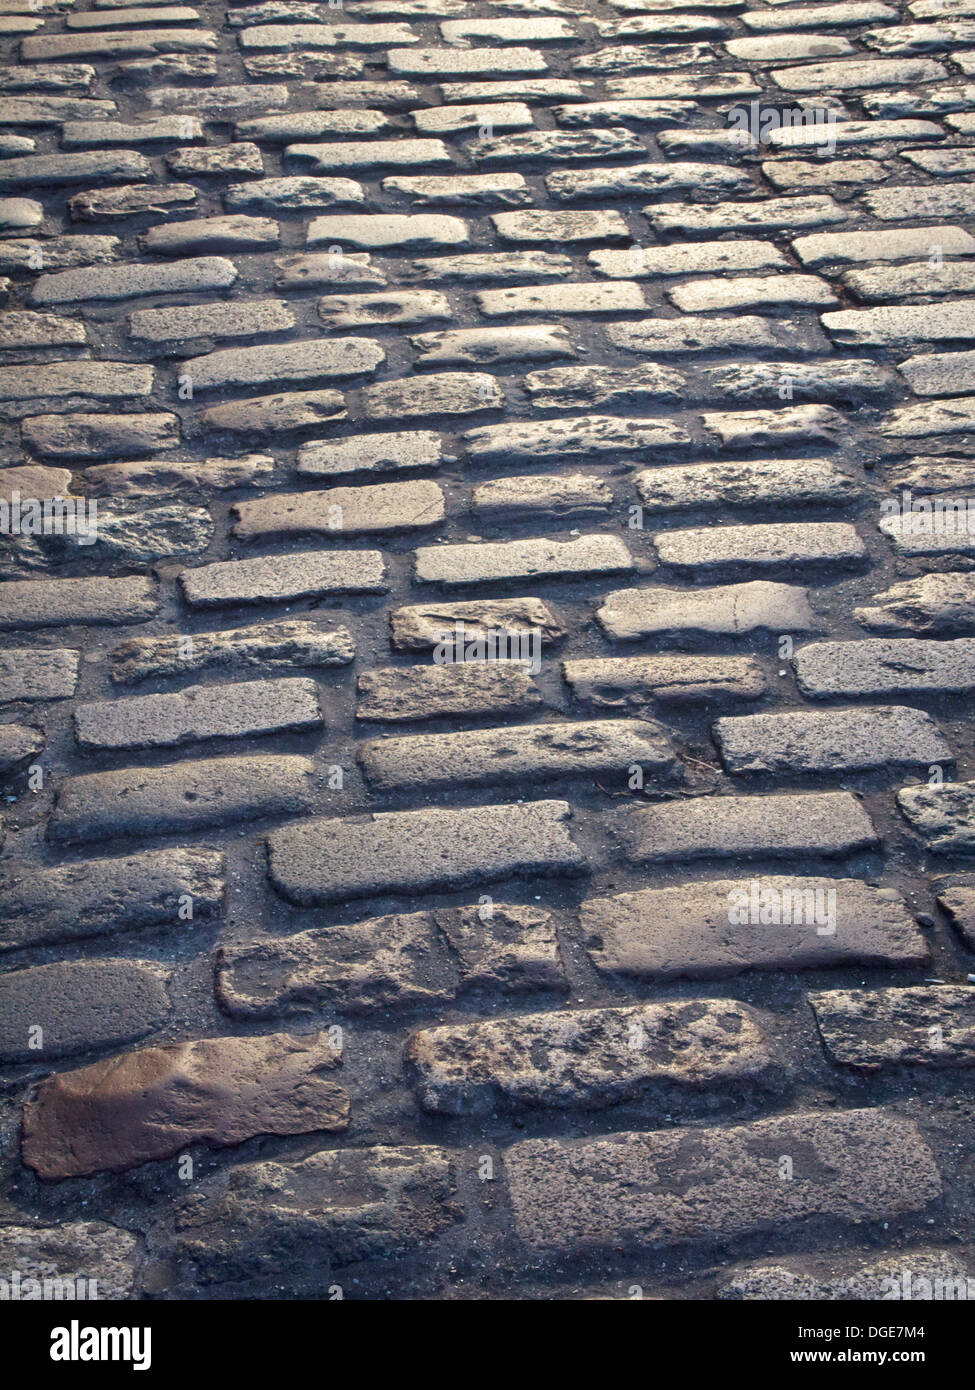 Paving Bricks, Covent Garden, London, England Stock Photo